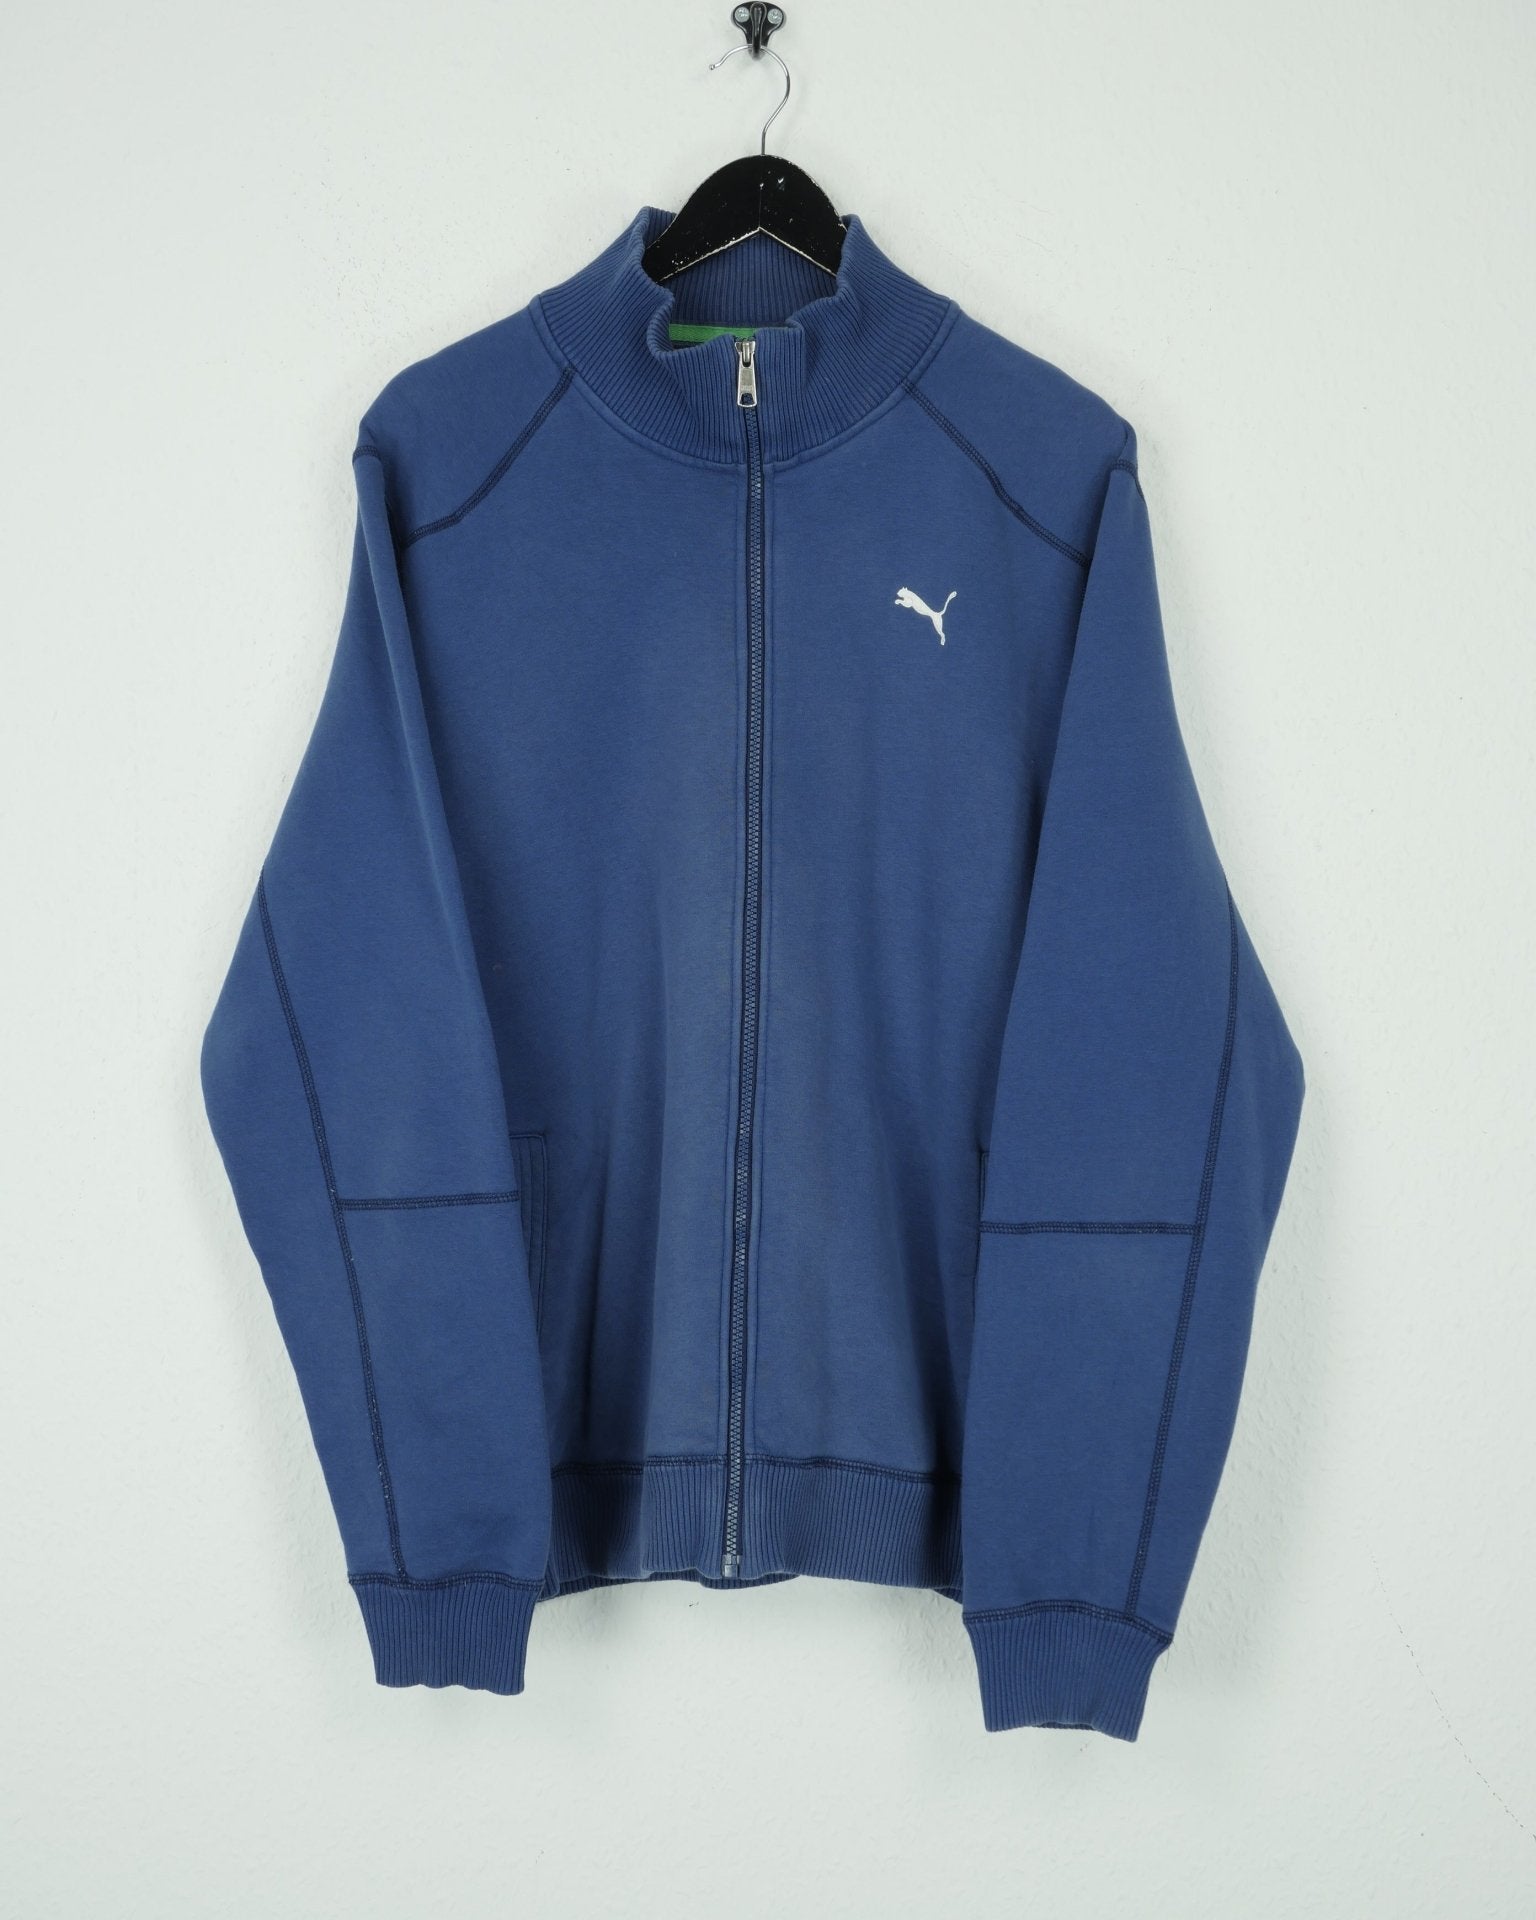 Puma basic embroidered logo blue zip sweater - Peeces